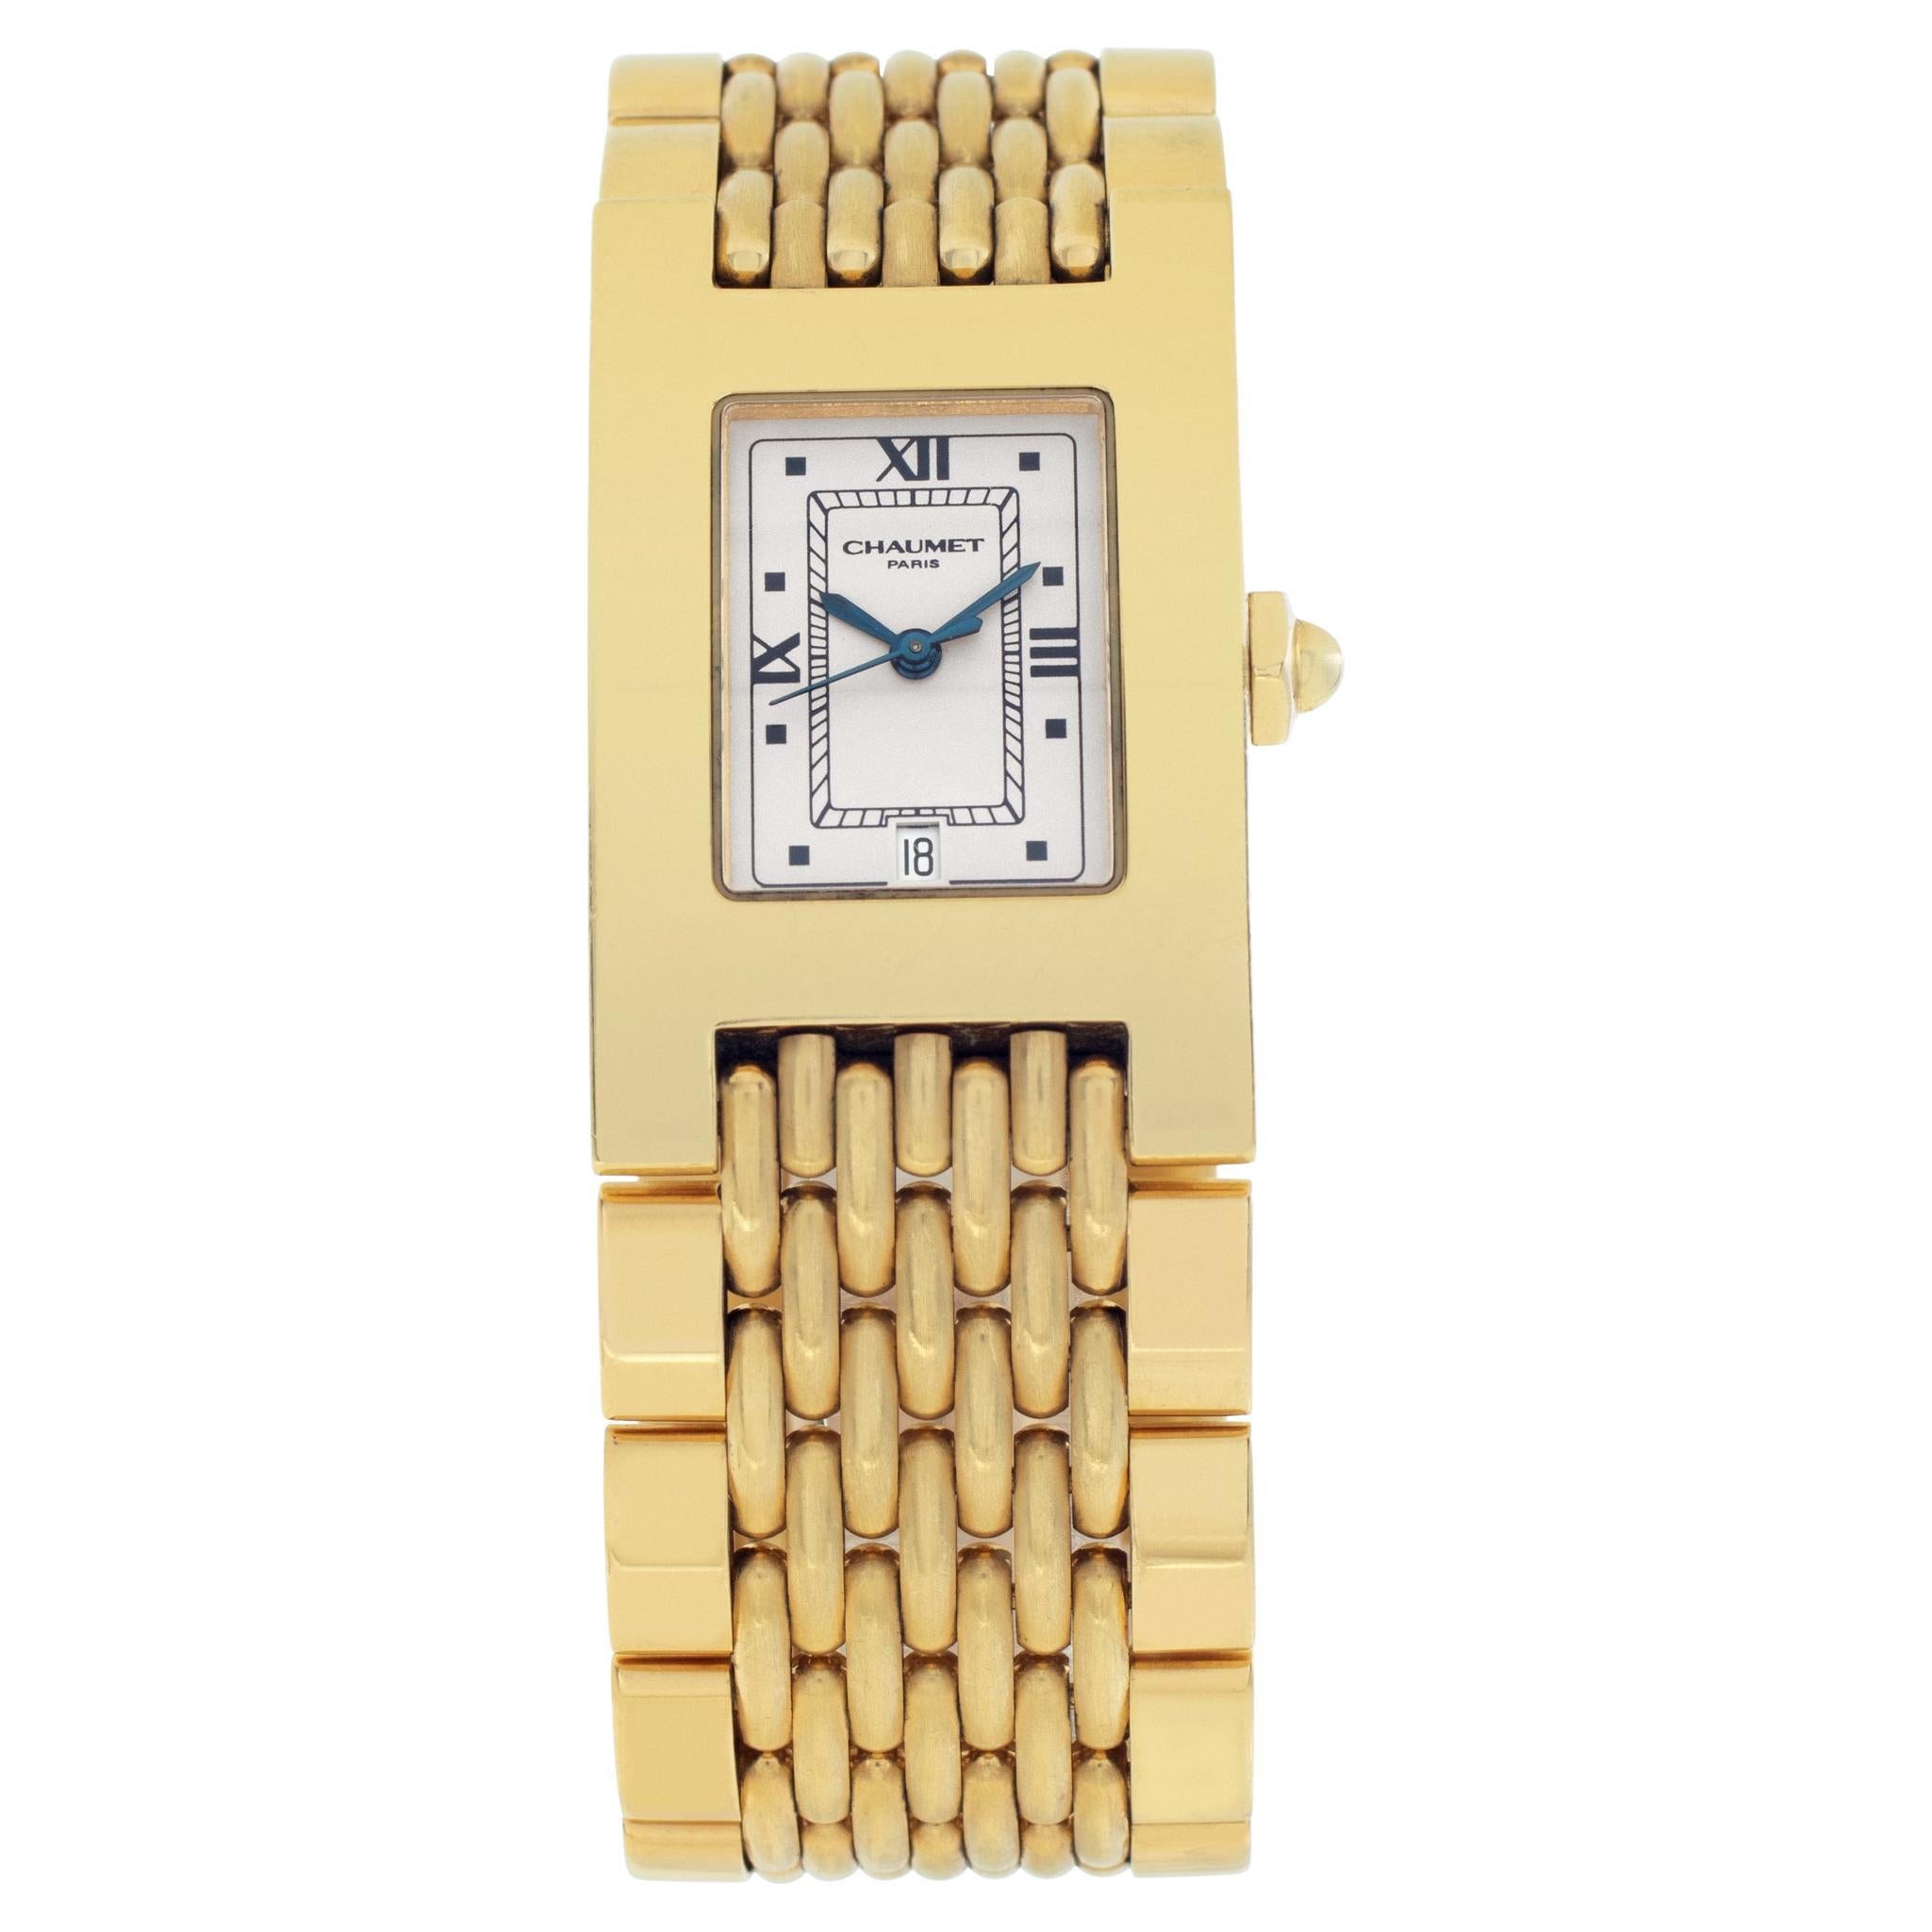 Chaumet Classic 18k Yellow Gold Wristwatch